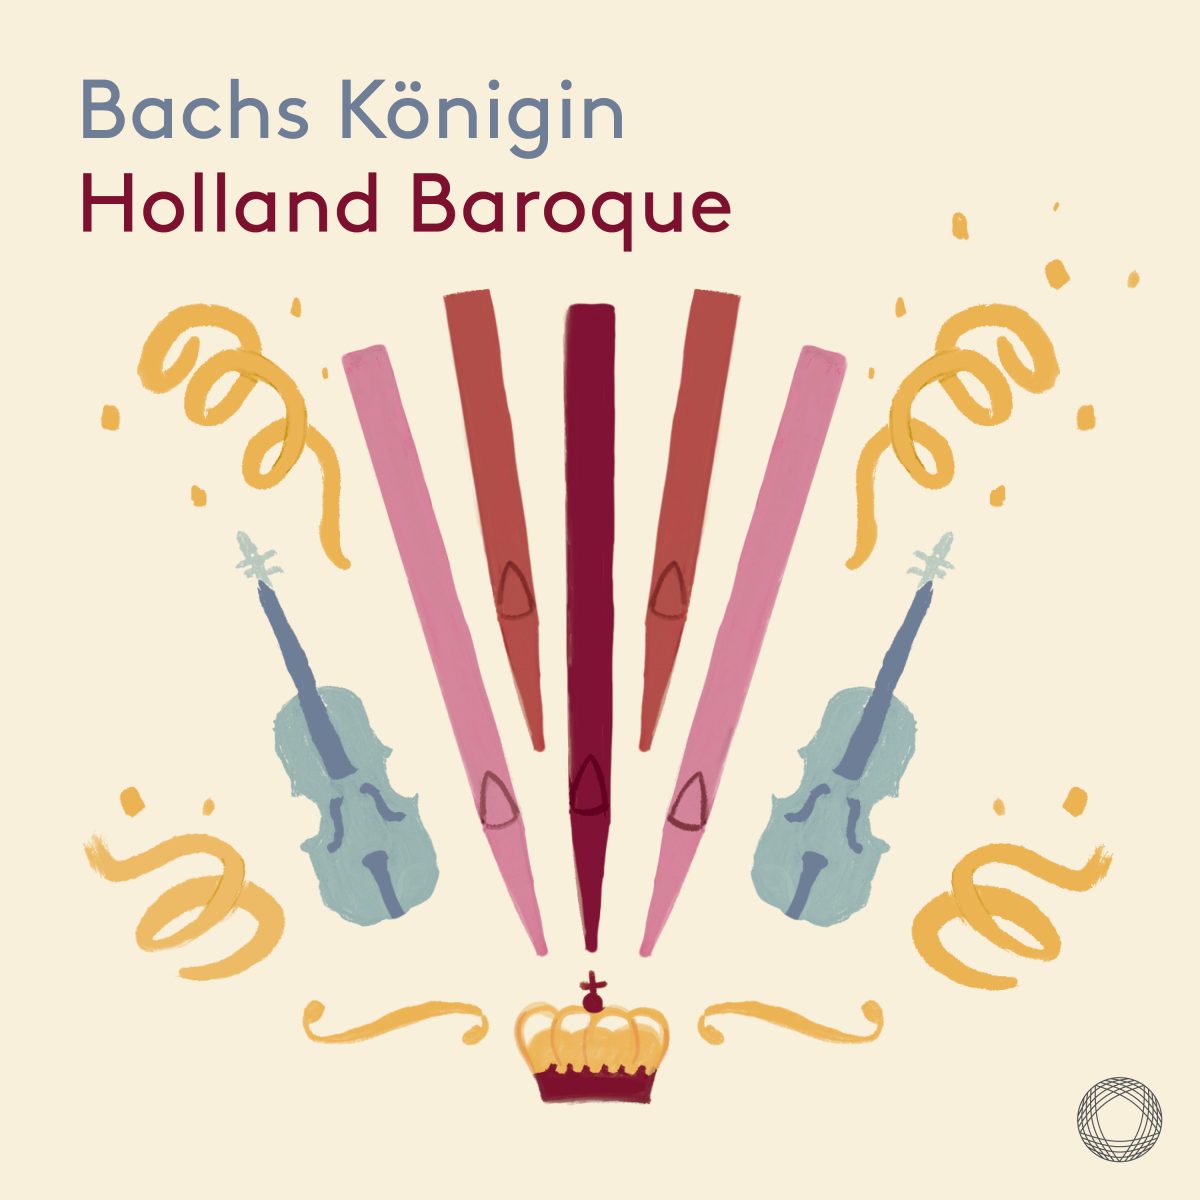 Holland Baroque presents Bachs Königin